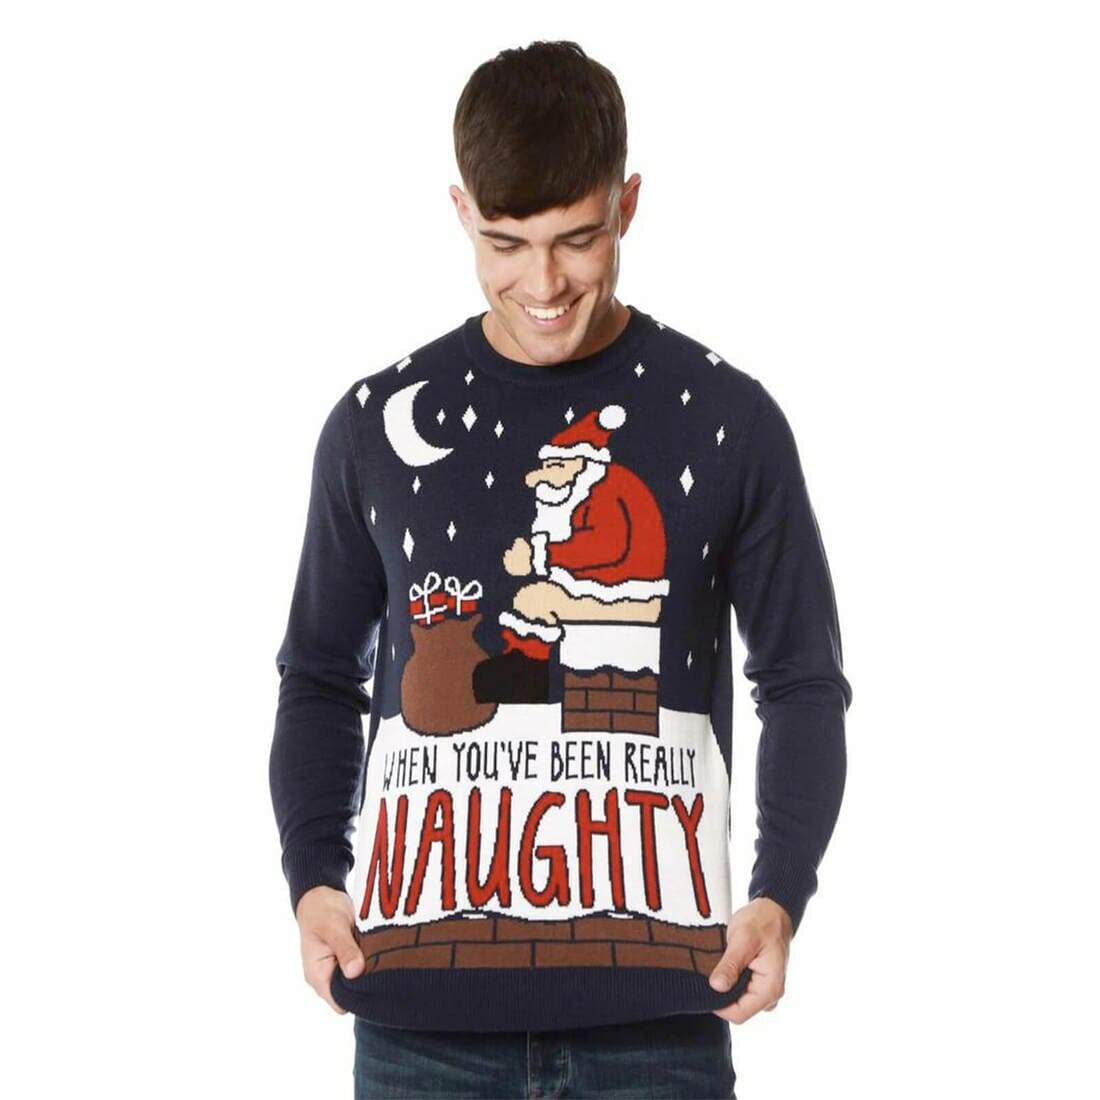 Mr Crimbo Mens Funny Naughty Santa Christmas Jumper Knit - MrCrimbo.co.uk -SRG1A13468_F - Blue -funny santa